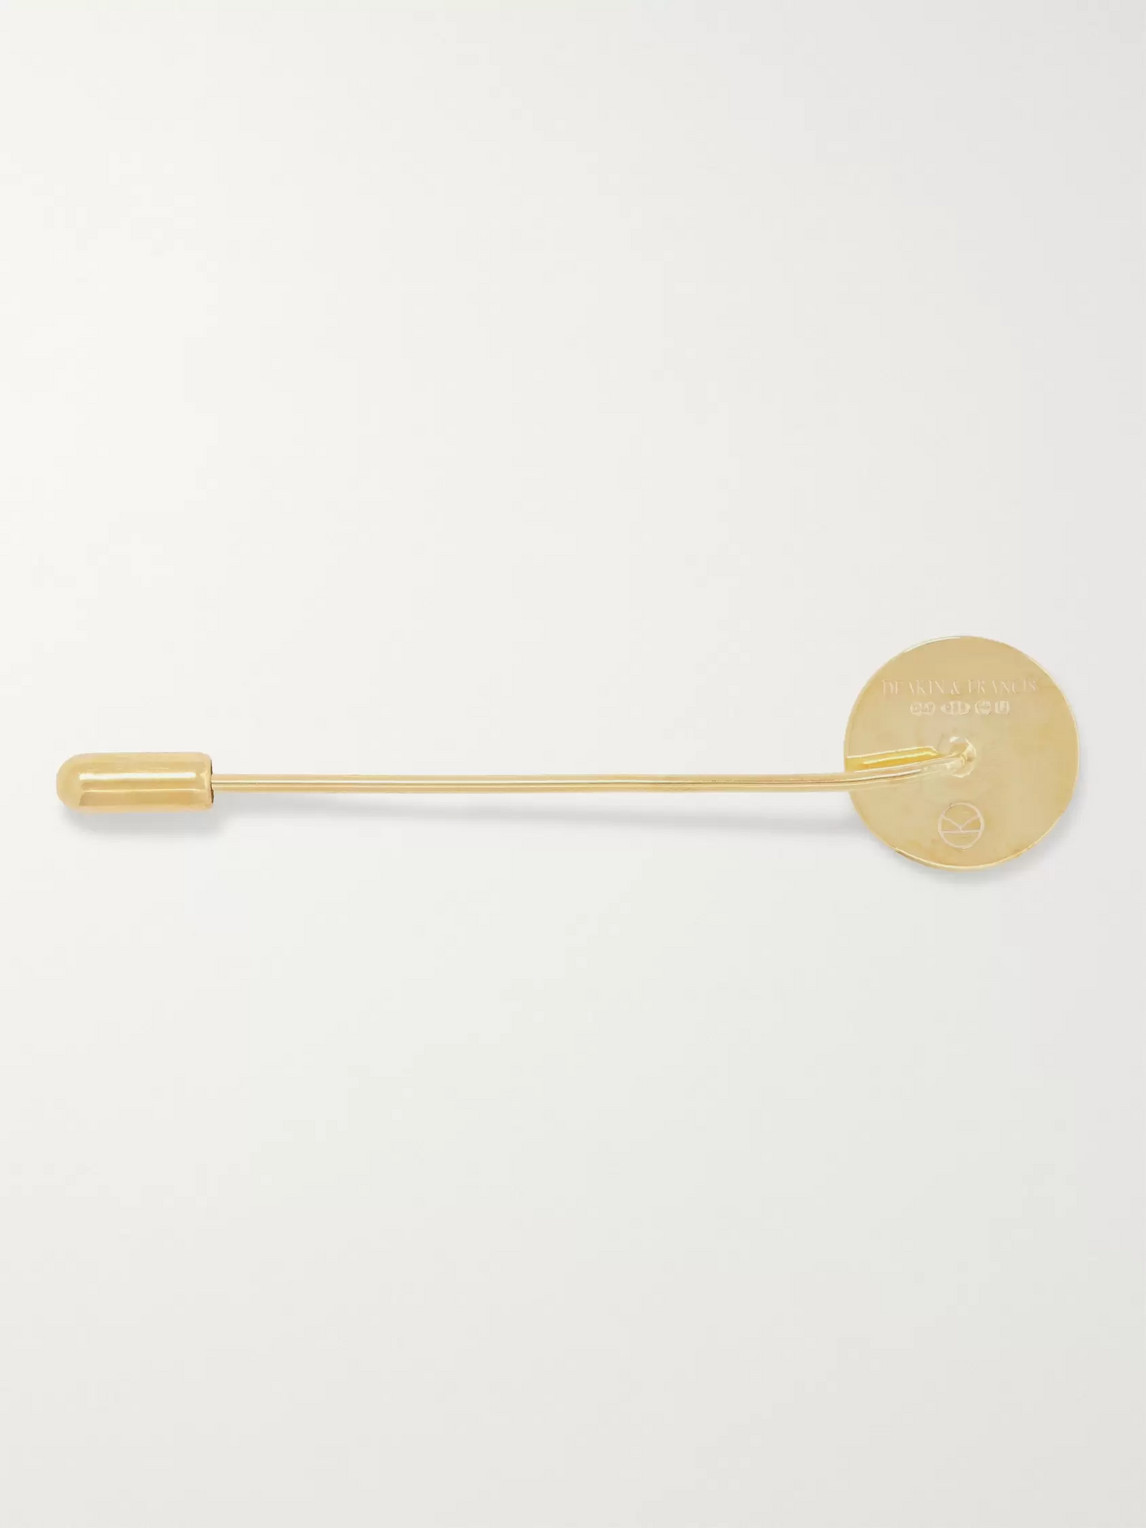 Kingsman Deakin & Francis Engraved Gold-plated Lapel Pin